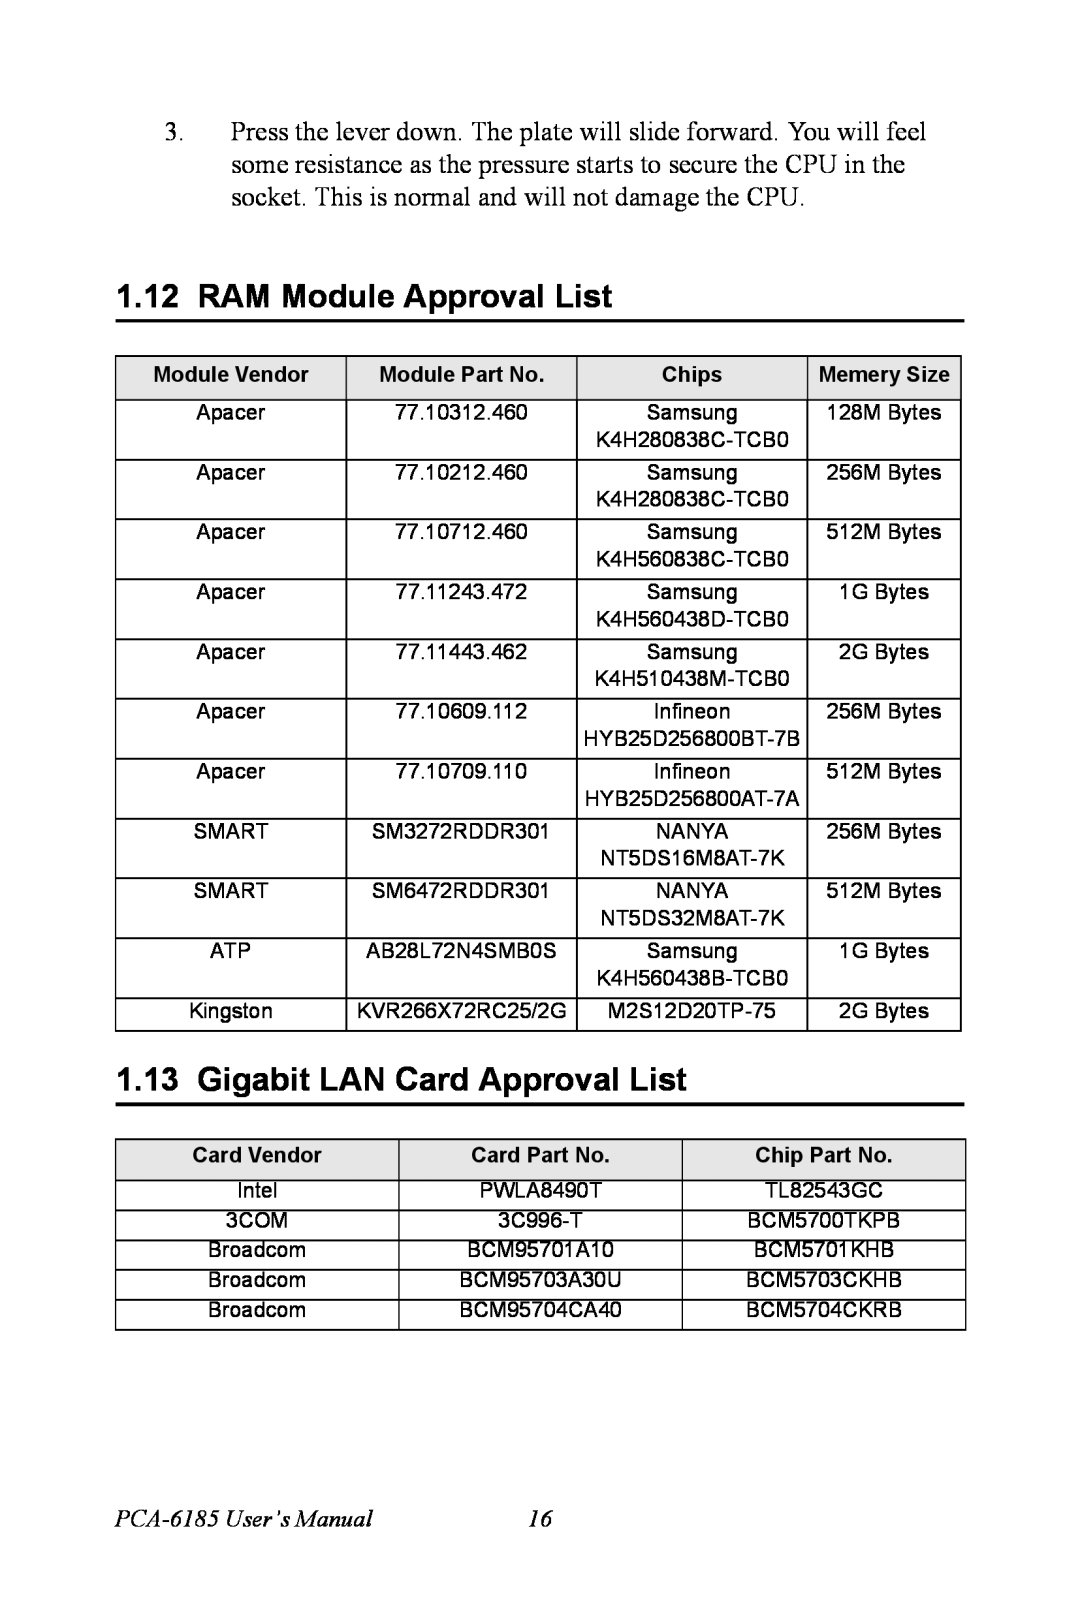 Advantech RAM Module Approval List, Gigabit LAN Card Approval List, PCA-6185 User’s Manual, Module Vendor, Chips 